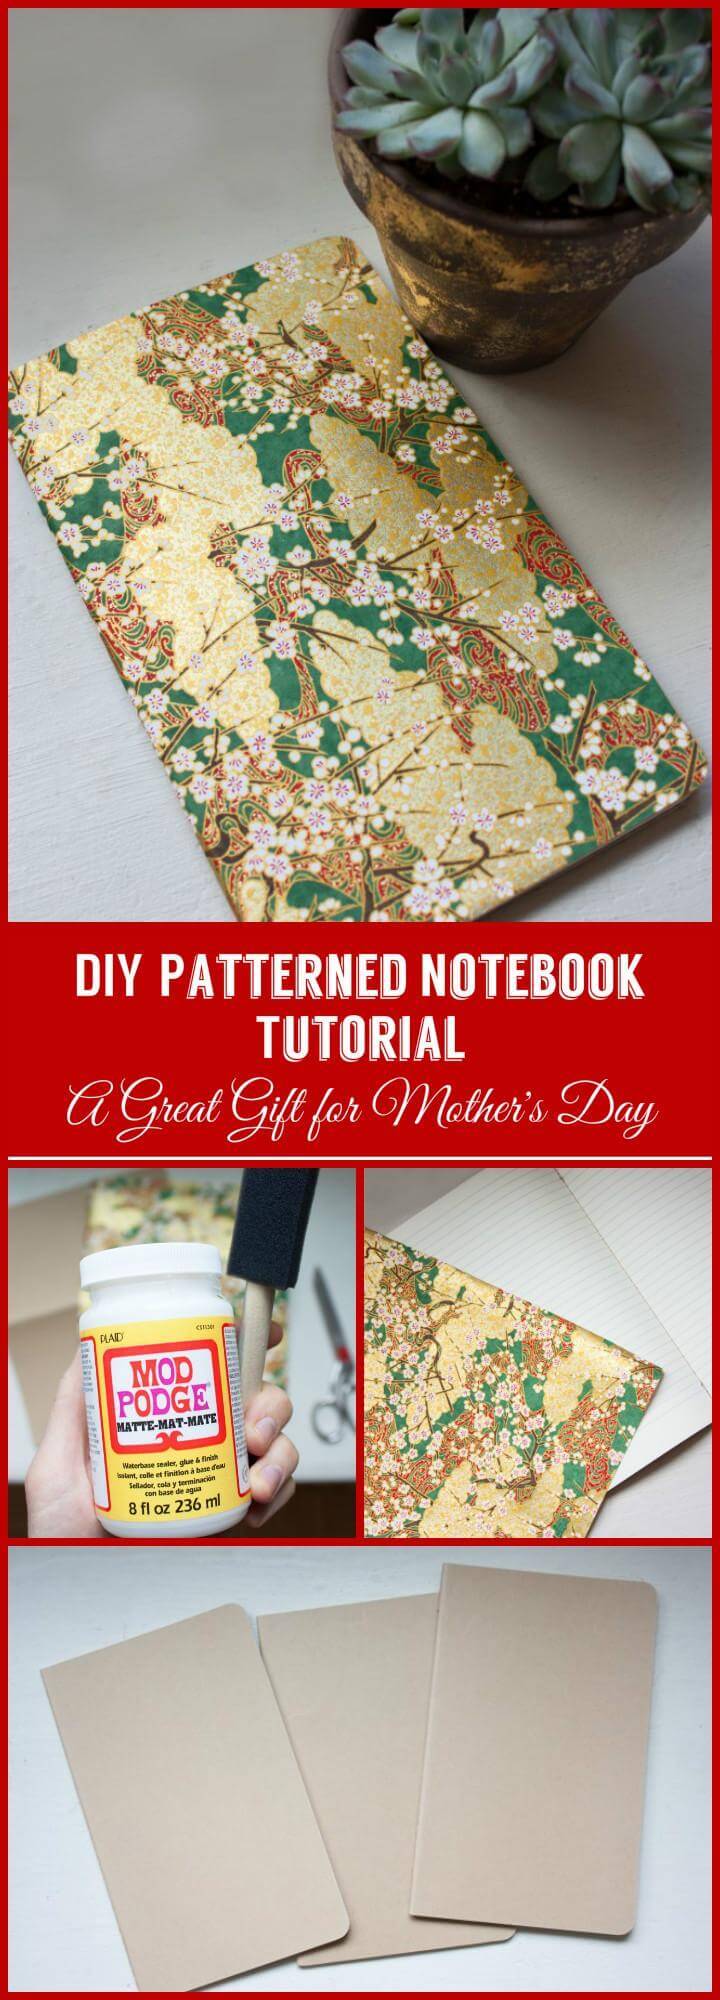 DIY patterned notebook tutorial